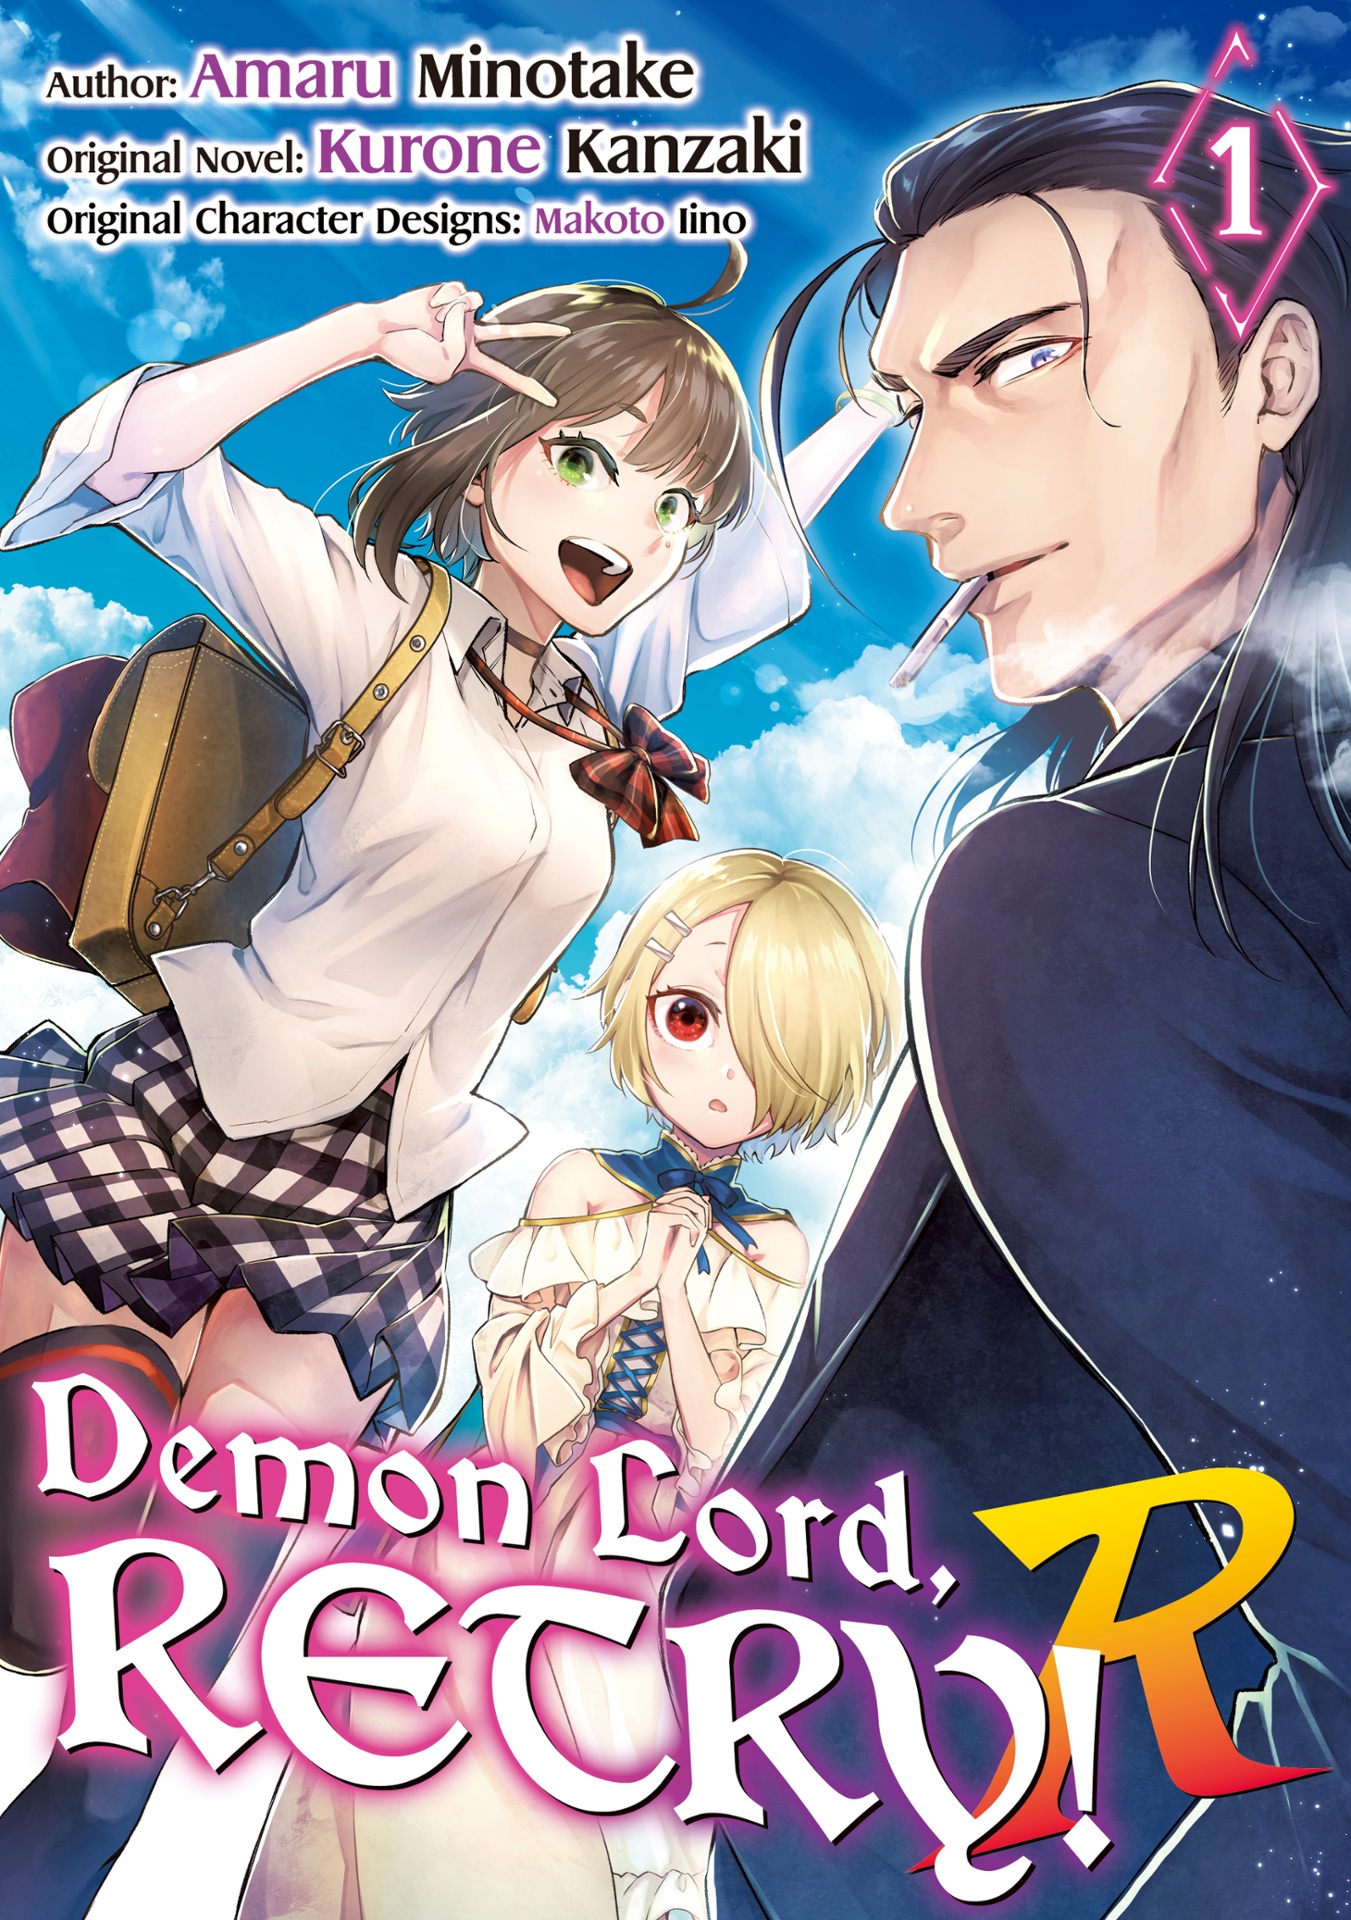 Demon Lord, Retry! R Sequel Manga Gets Anime - News - Anime News